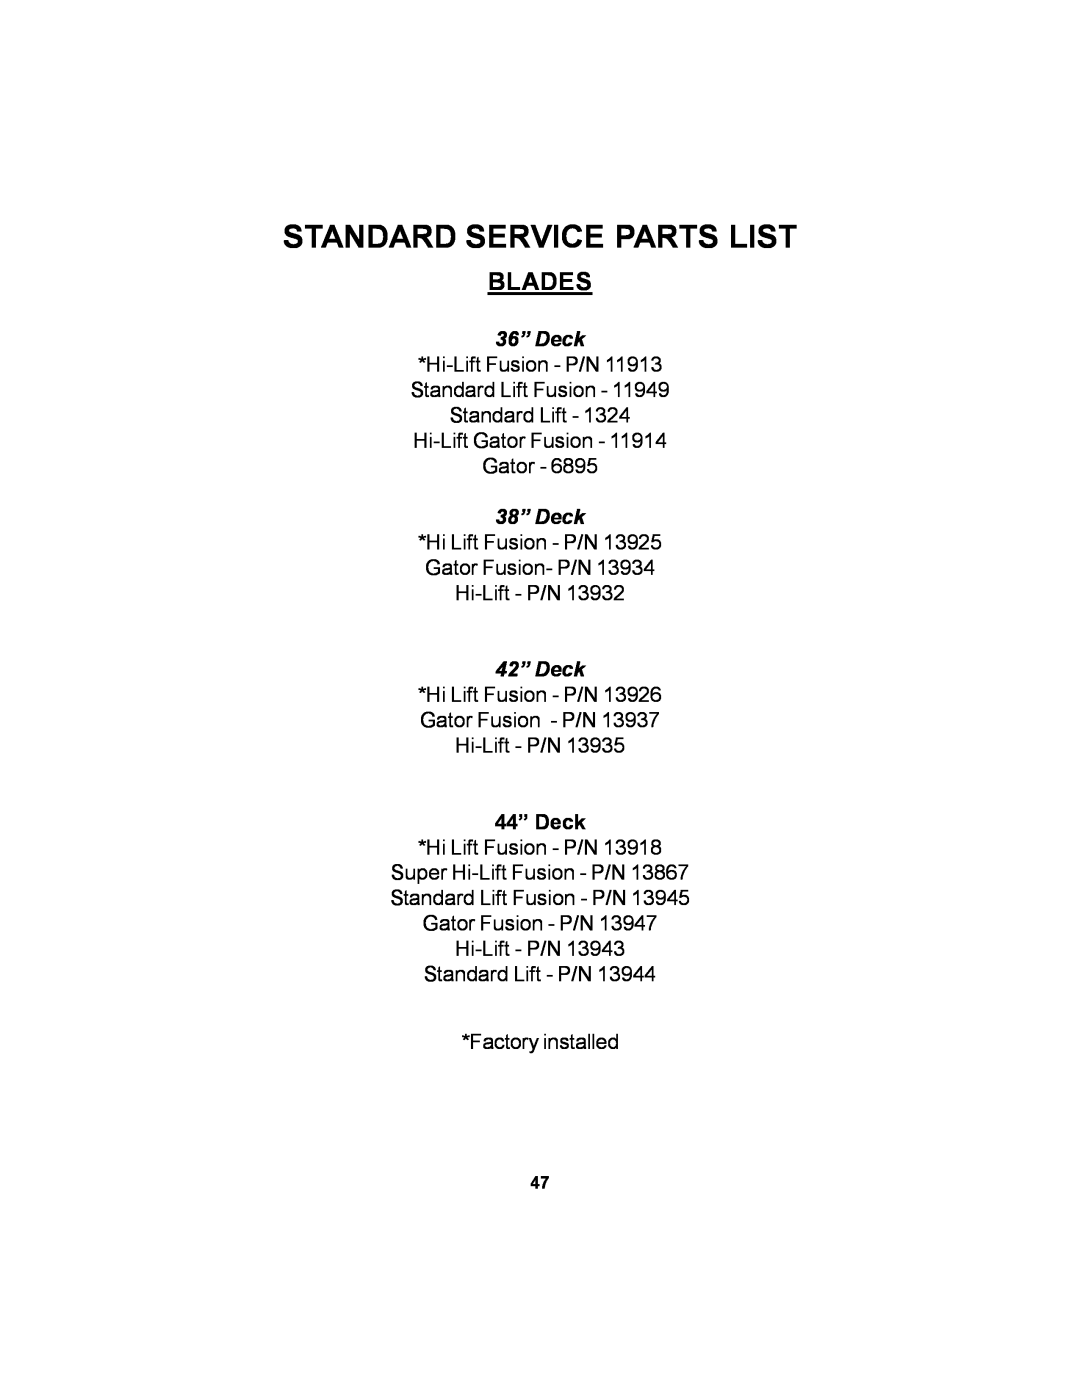 Dixon 36 manual Standard Service Parts List, Blades, 44” Deck 